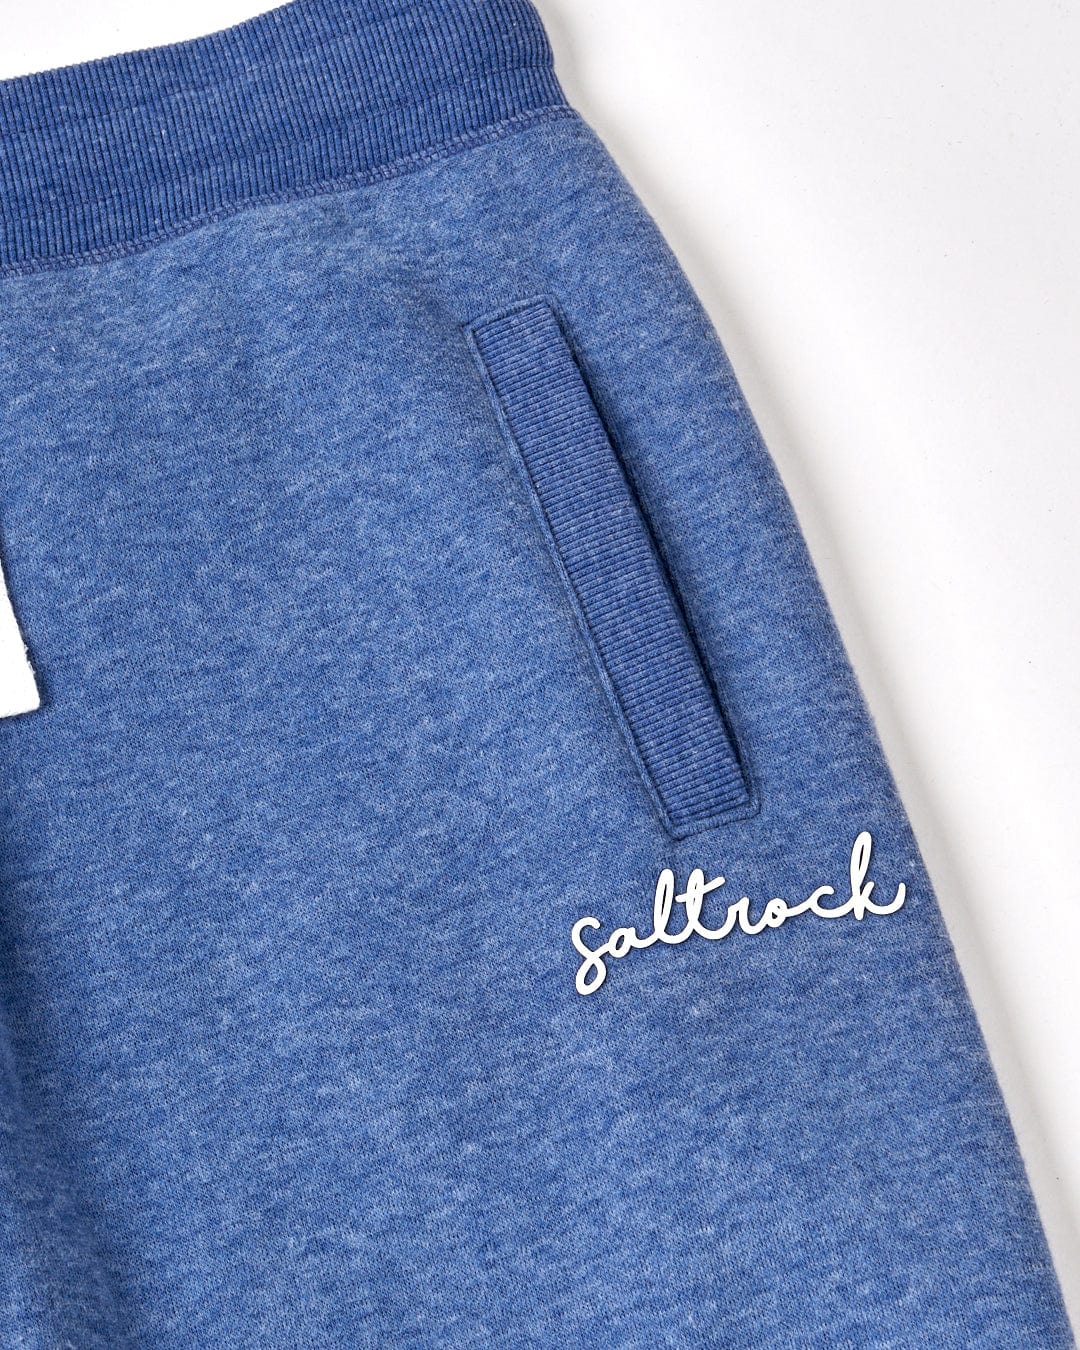 A blue sweatpants from Saltrock's Velator - Womens Jogger - Navy range with the word "Saltrock" on it.